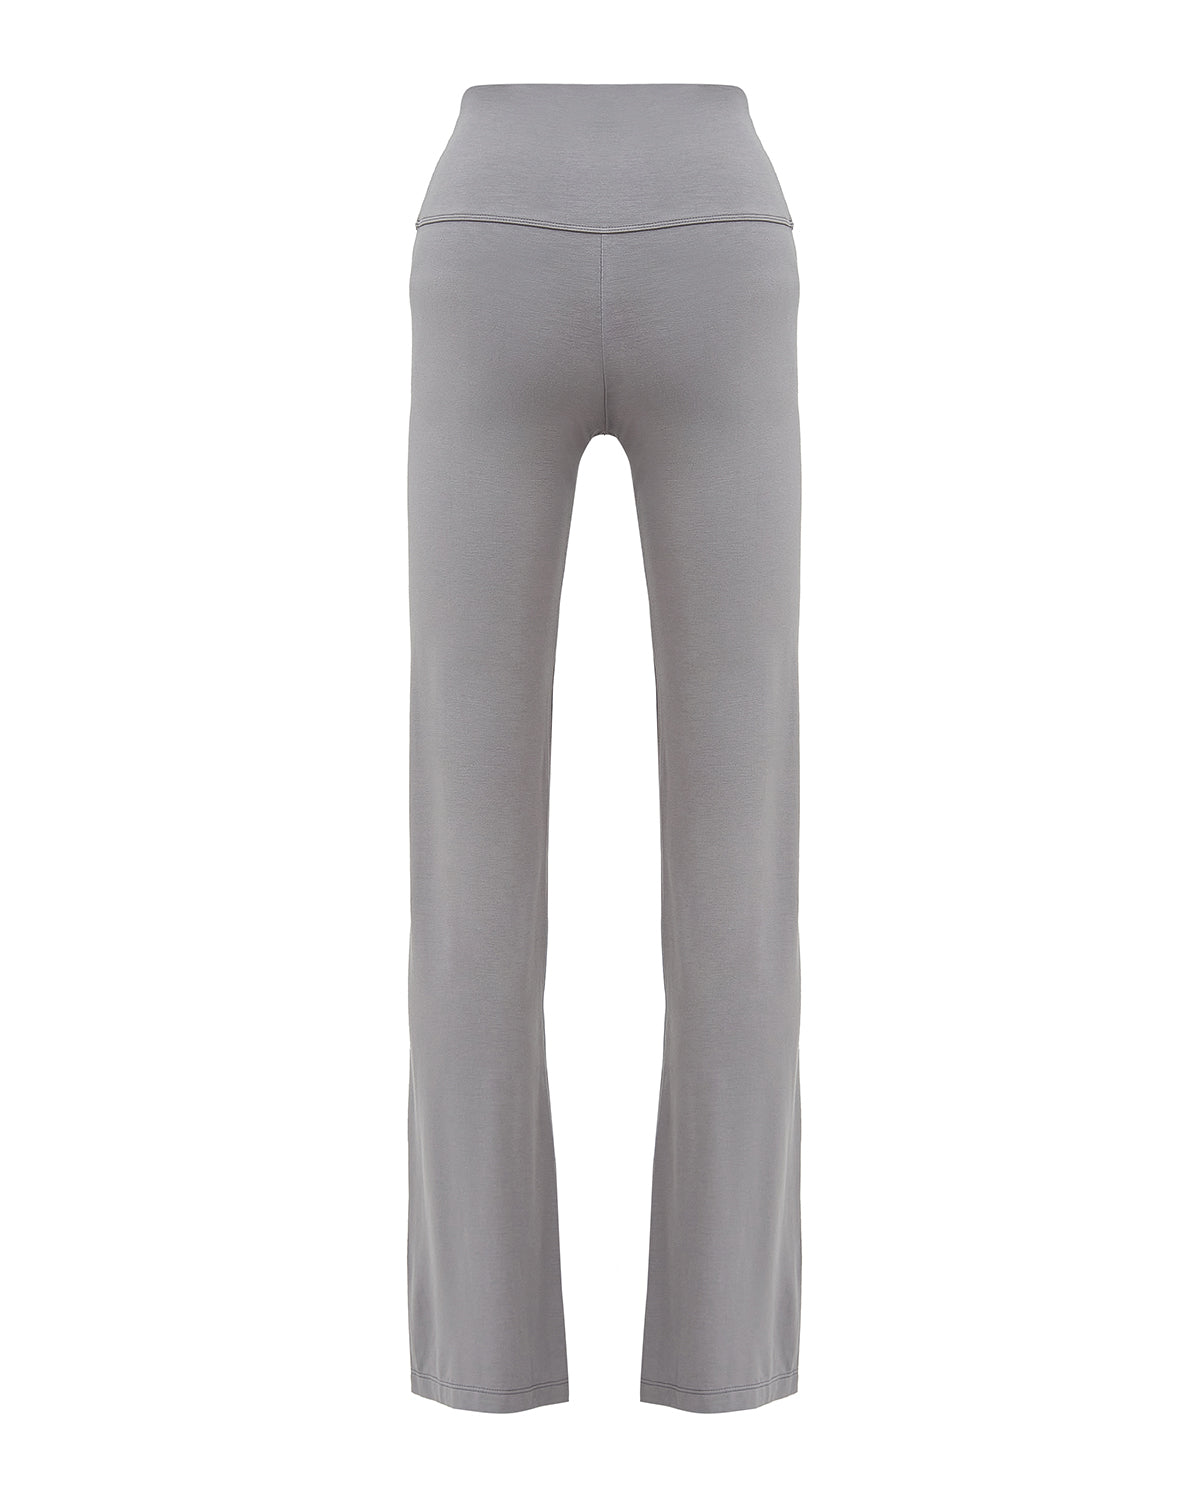 Basic Flare Pants in Stone Grey